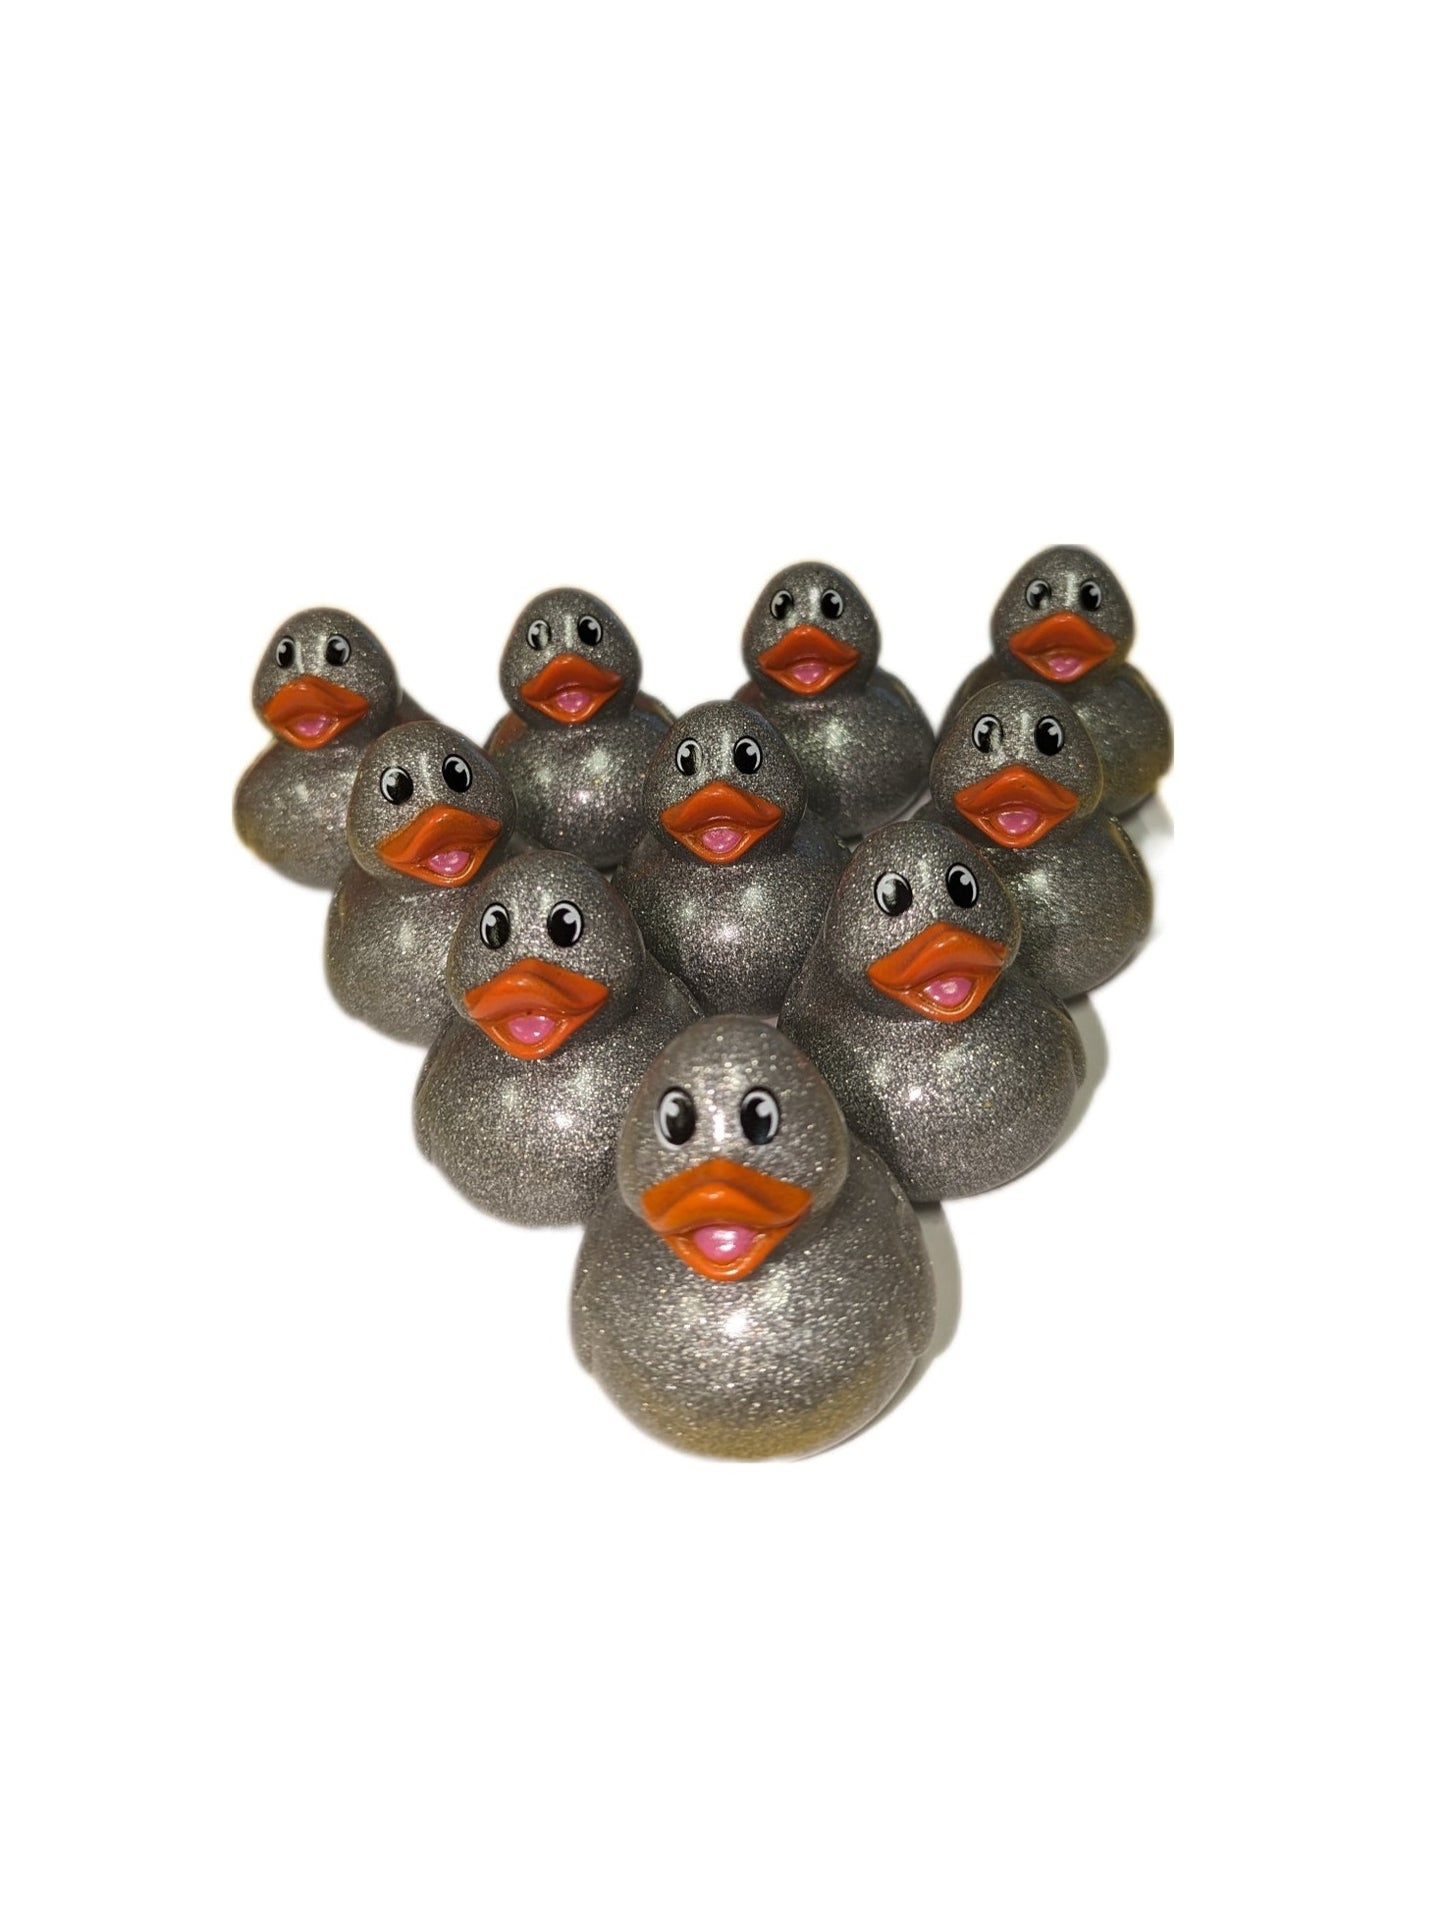 10 Silver Glitter & Orange Beak Ducks - 2" Rubber Ducks